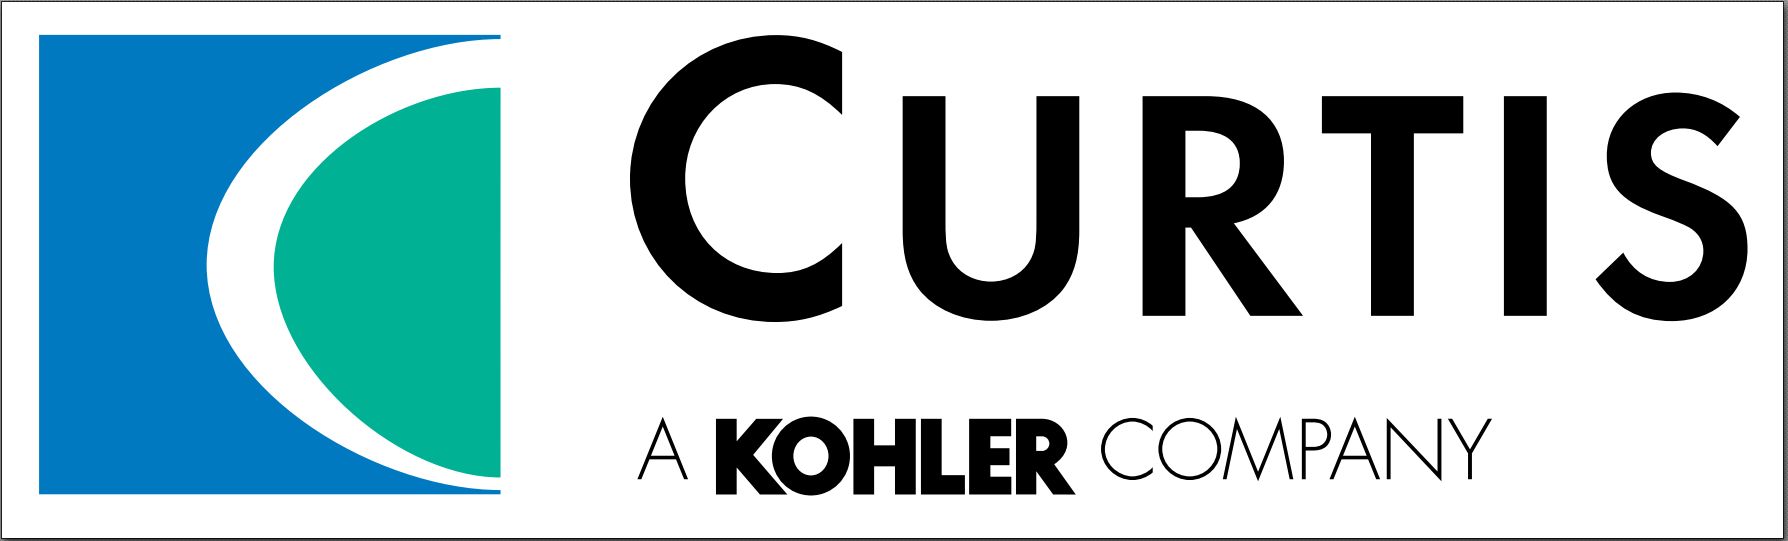 Curtis_Logo_Kohler